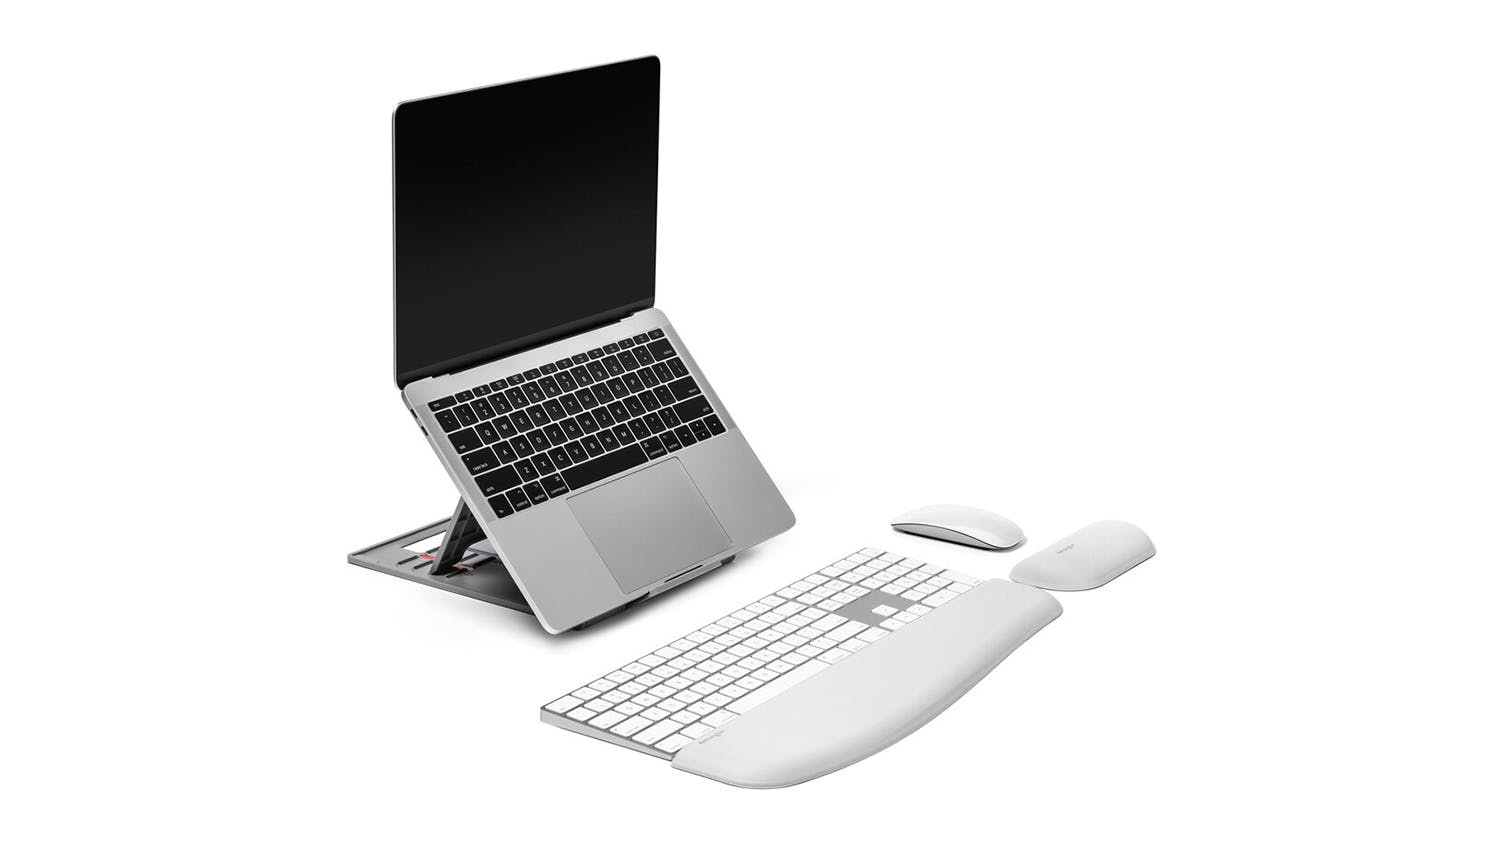 Kensington Easy Riser Go Adjustable 14" Laptop Stand - Grey